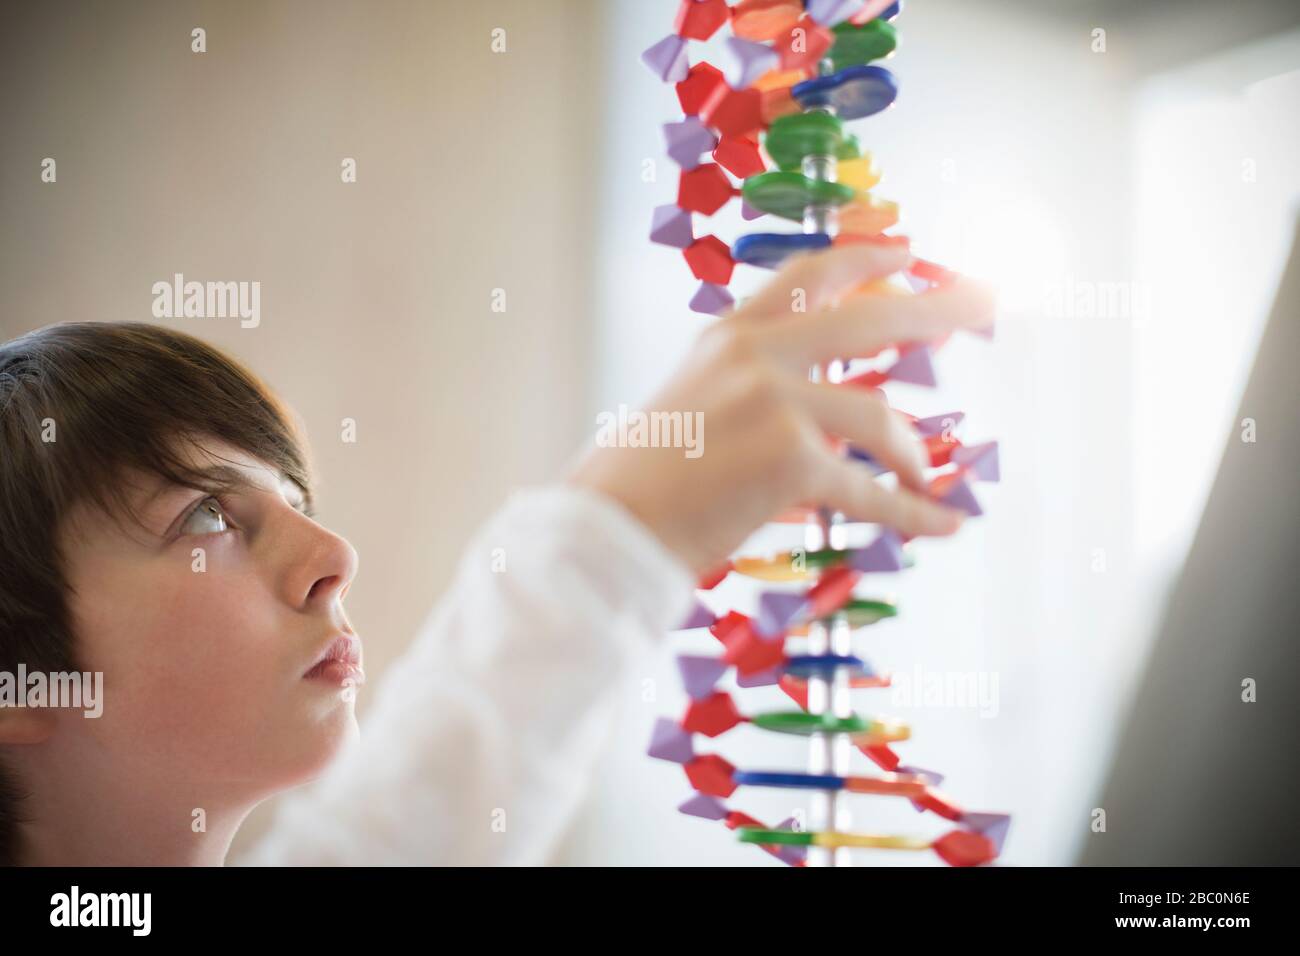 Curious boy examining DNA model Stock Photo